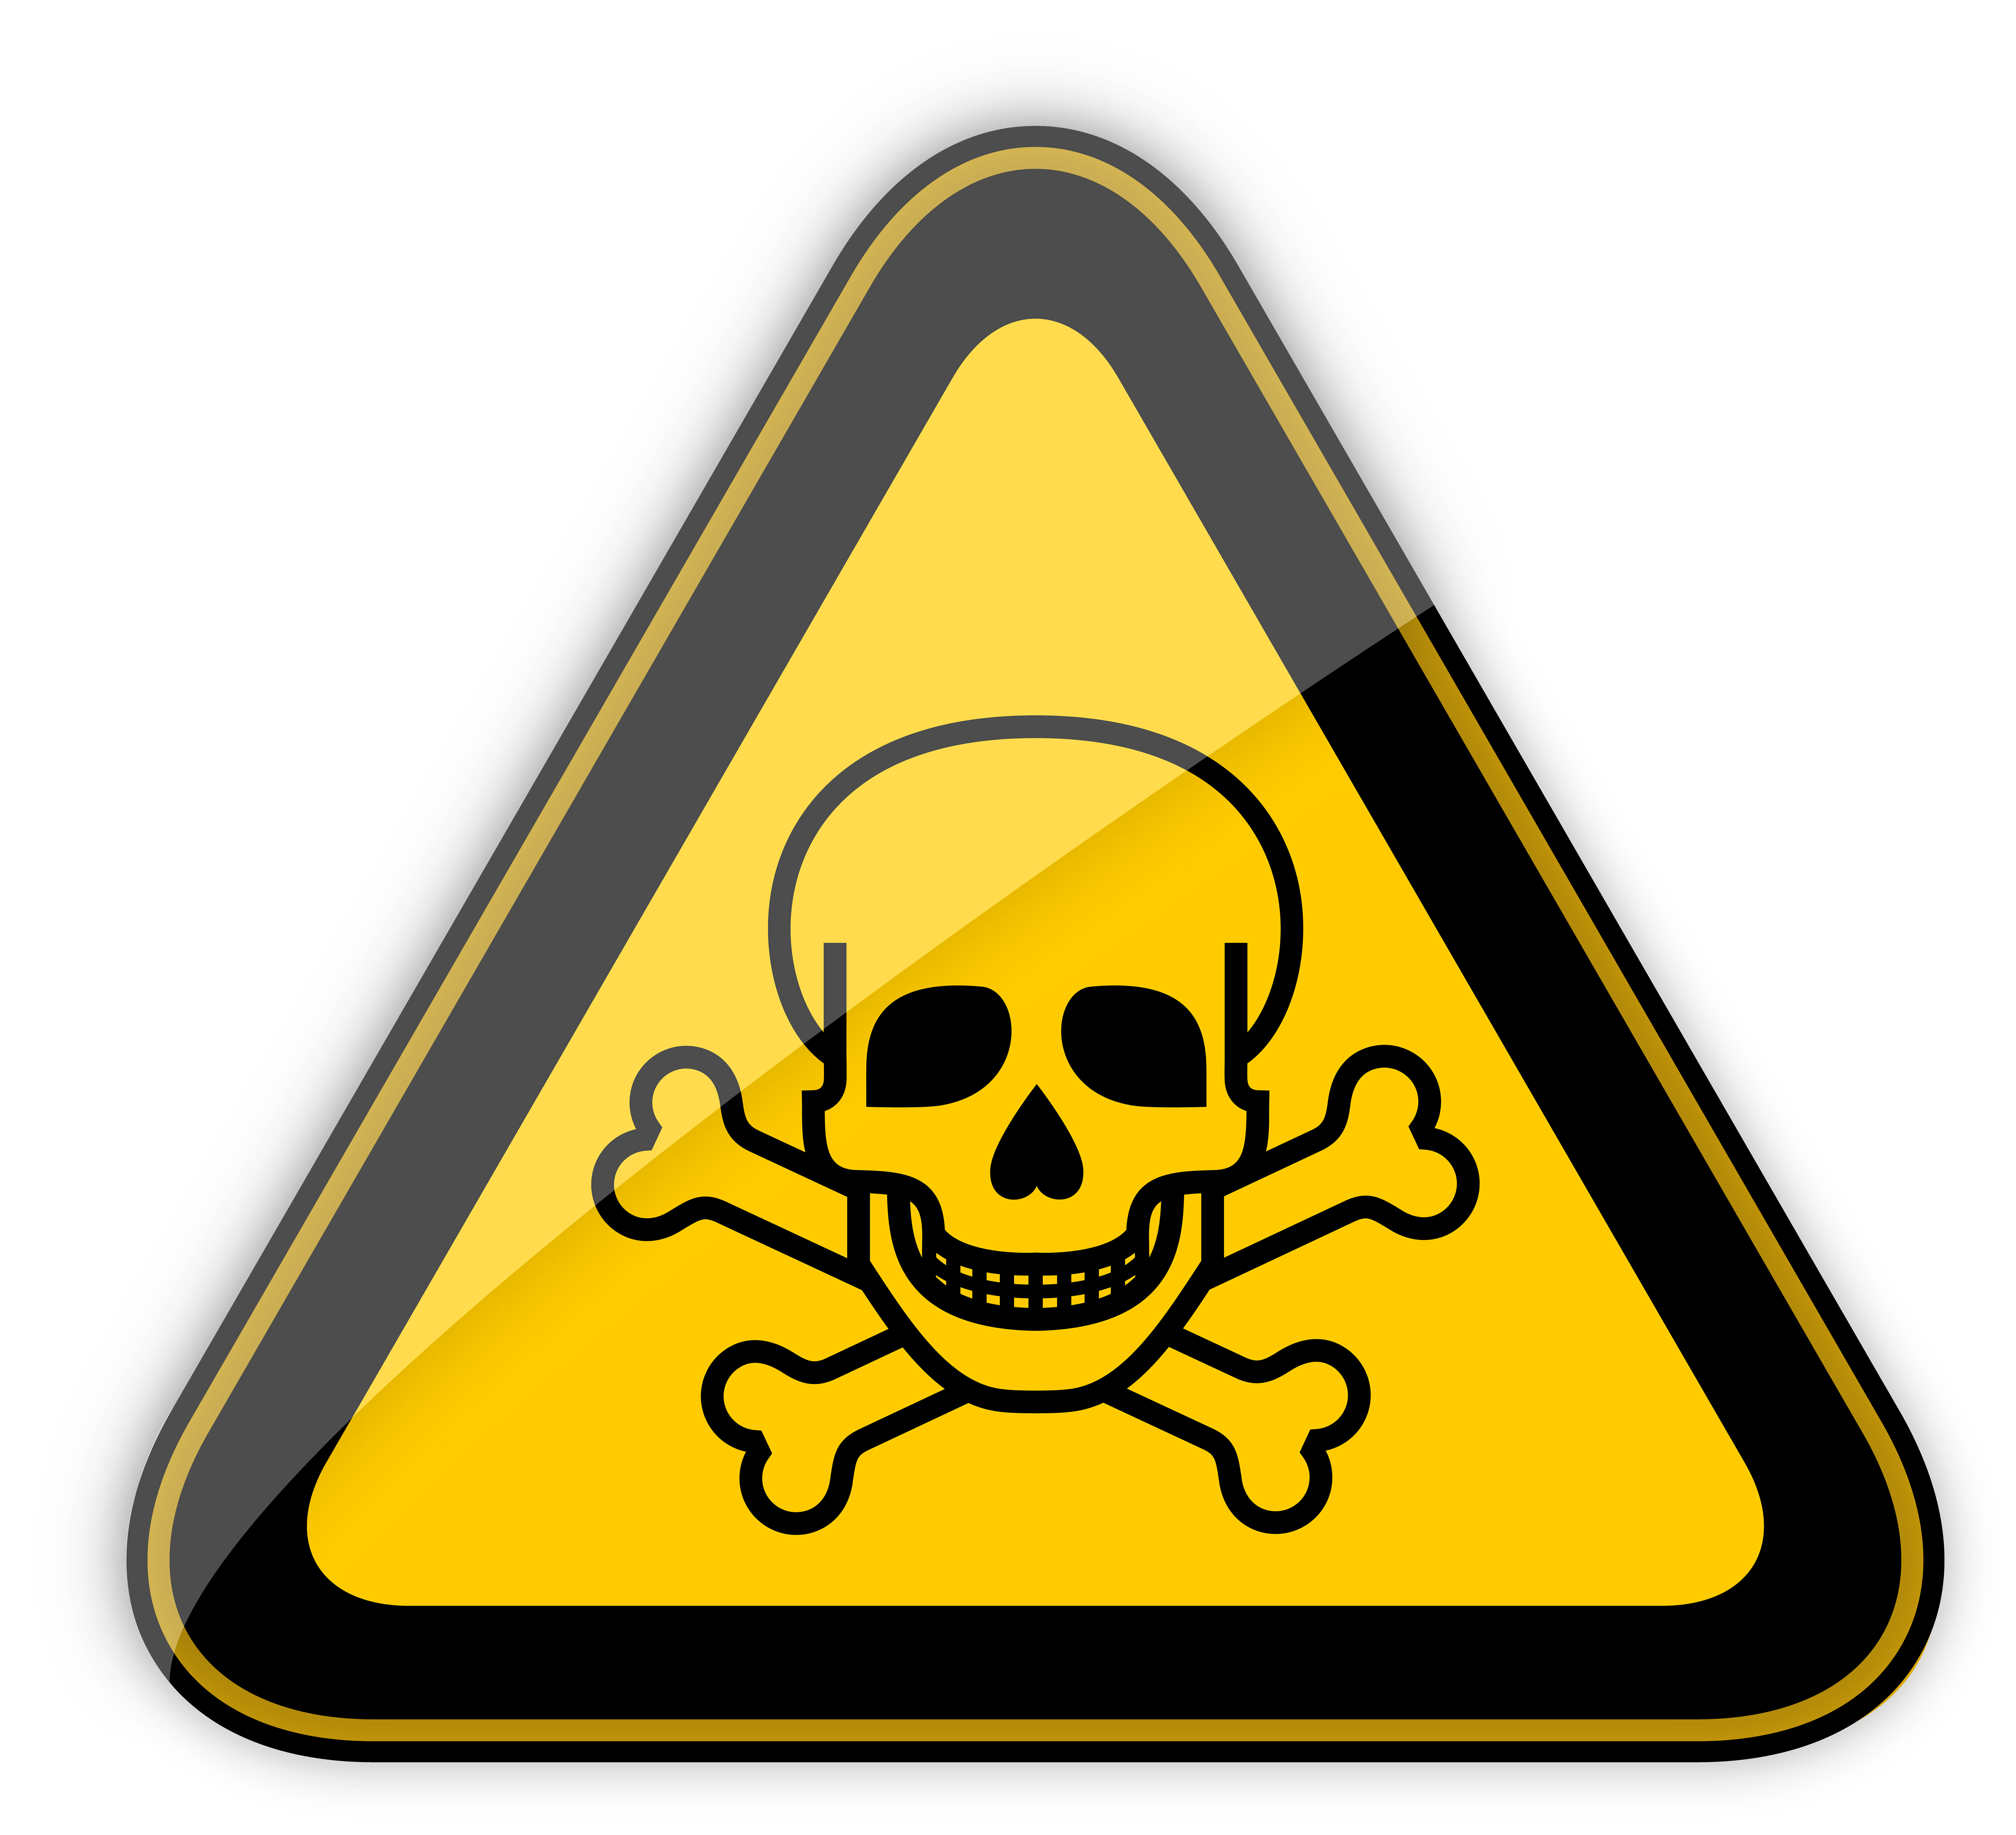 Toxic Warning Sign PNG Clipart.